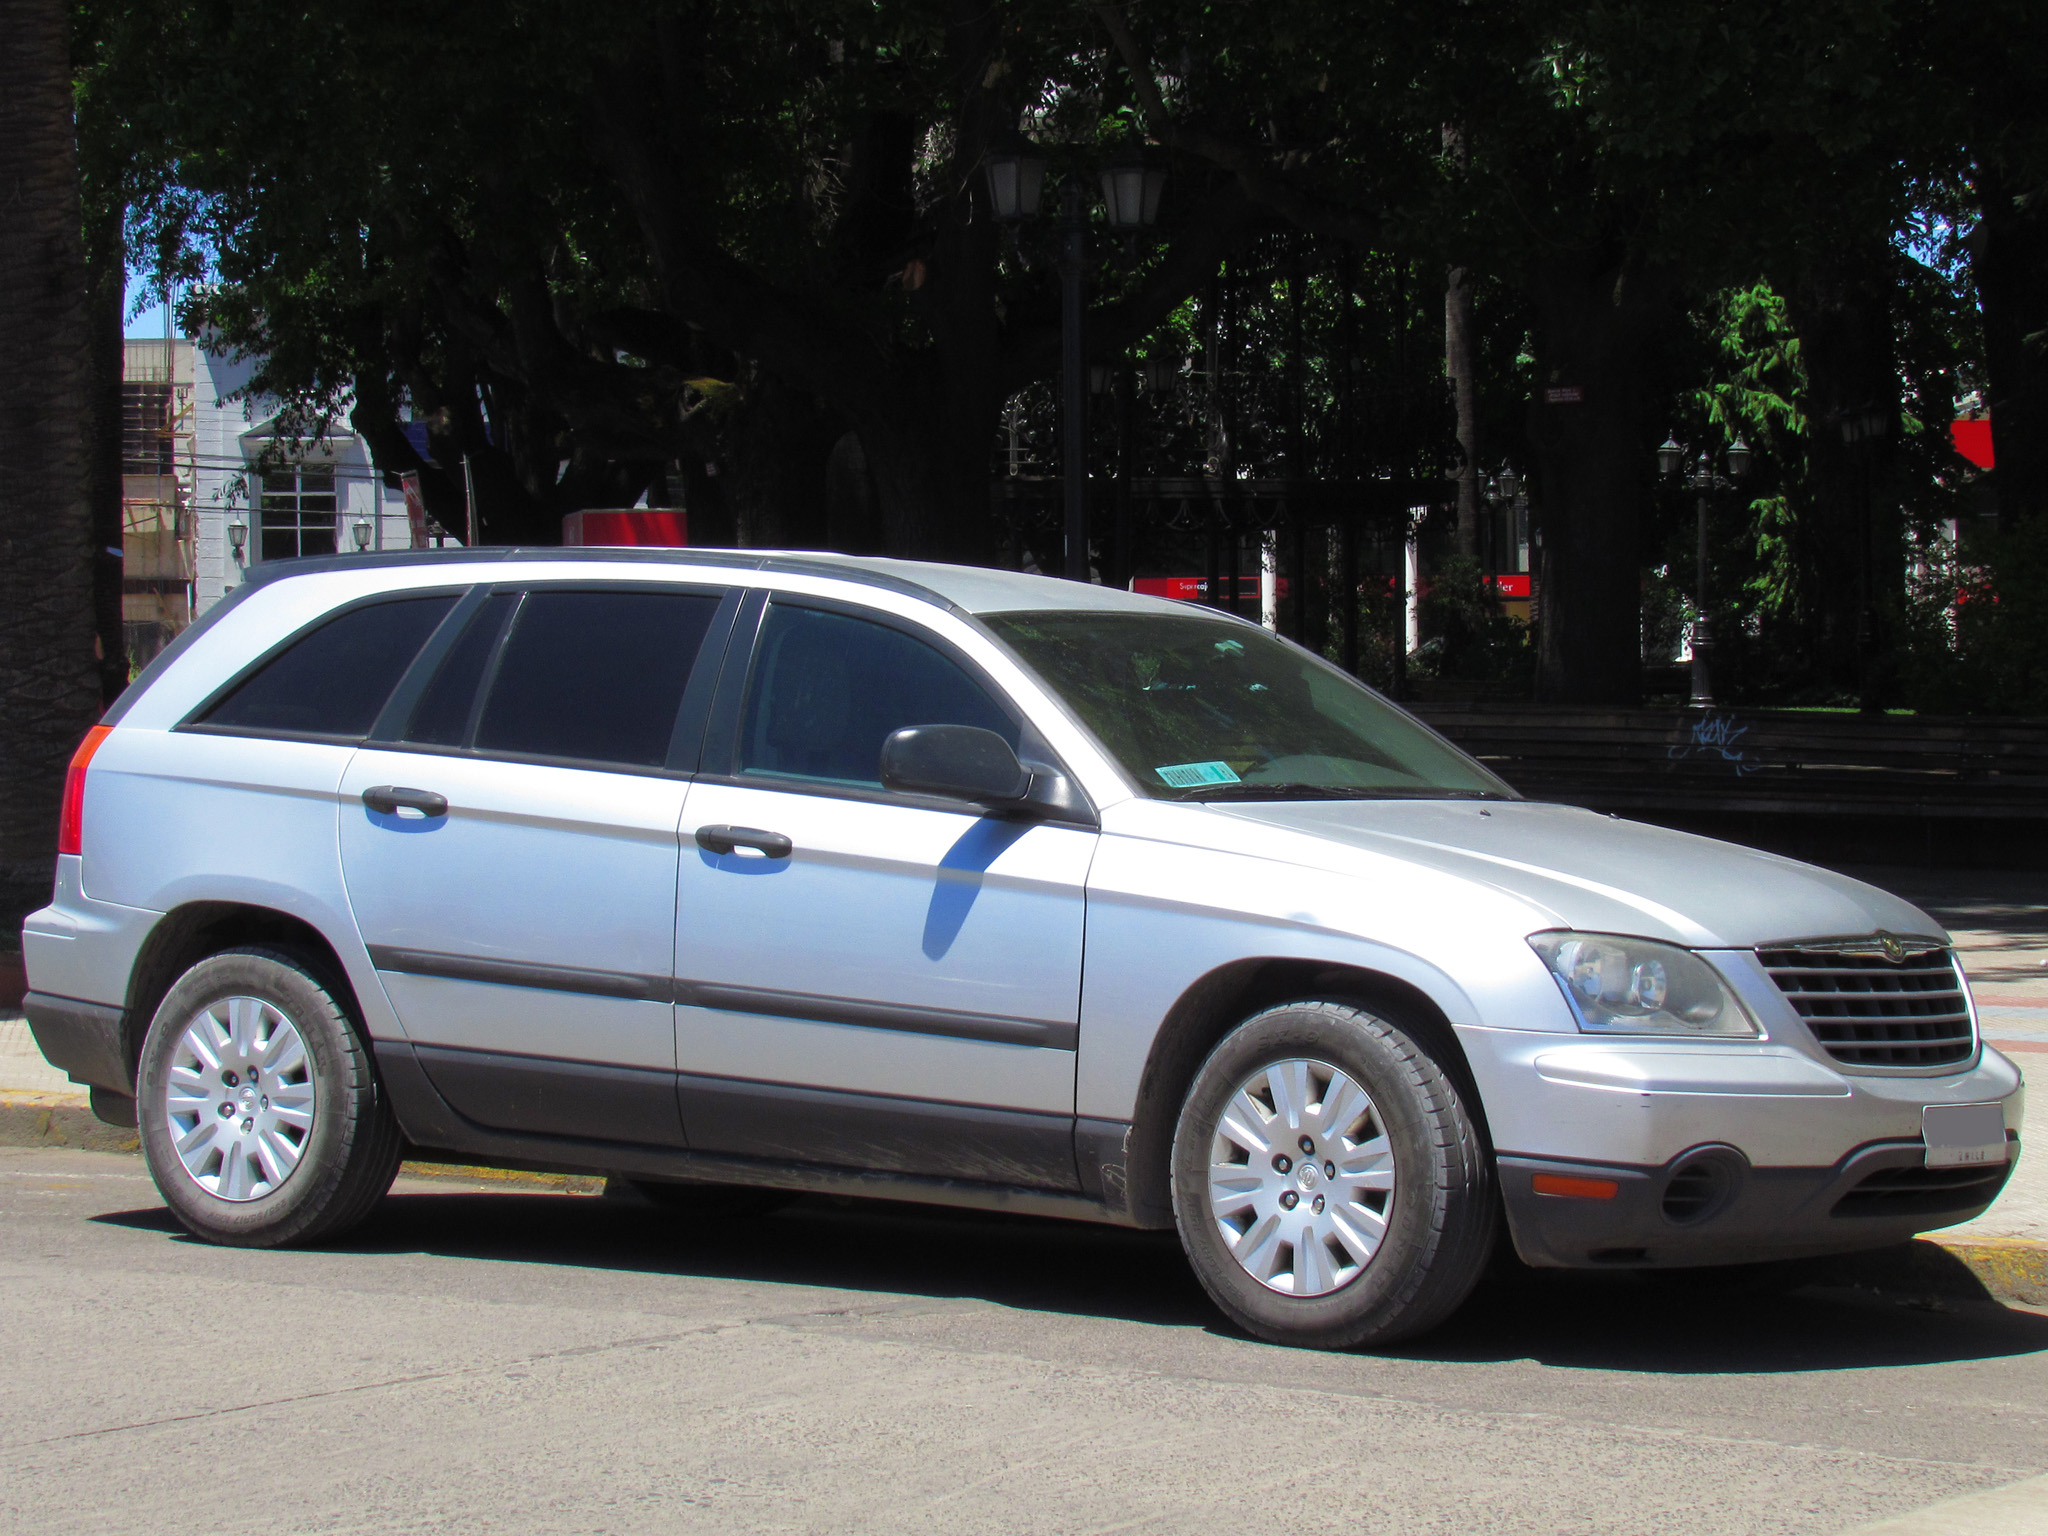 File:Chrysler Pacifica 2008 (9623207479).jpg - Wikimedia Commons